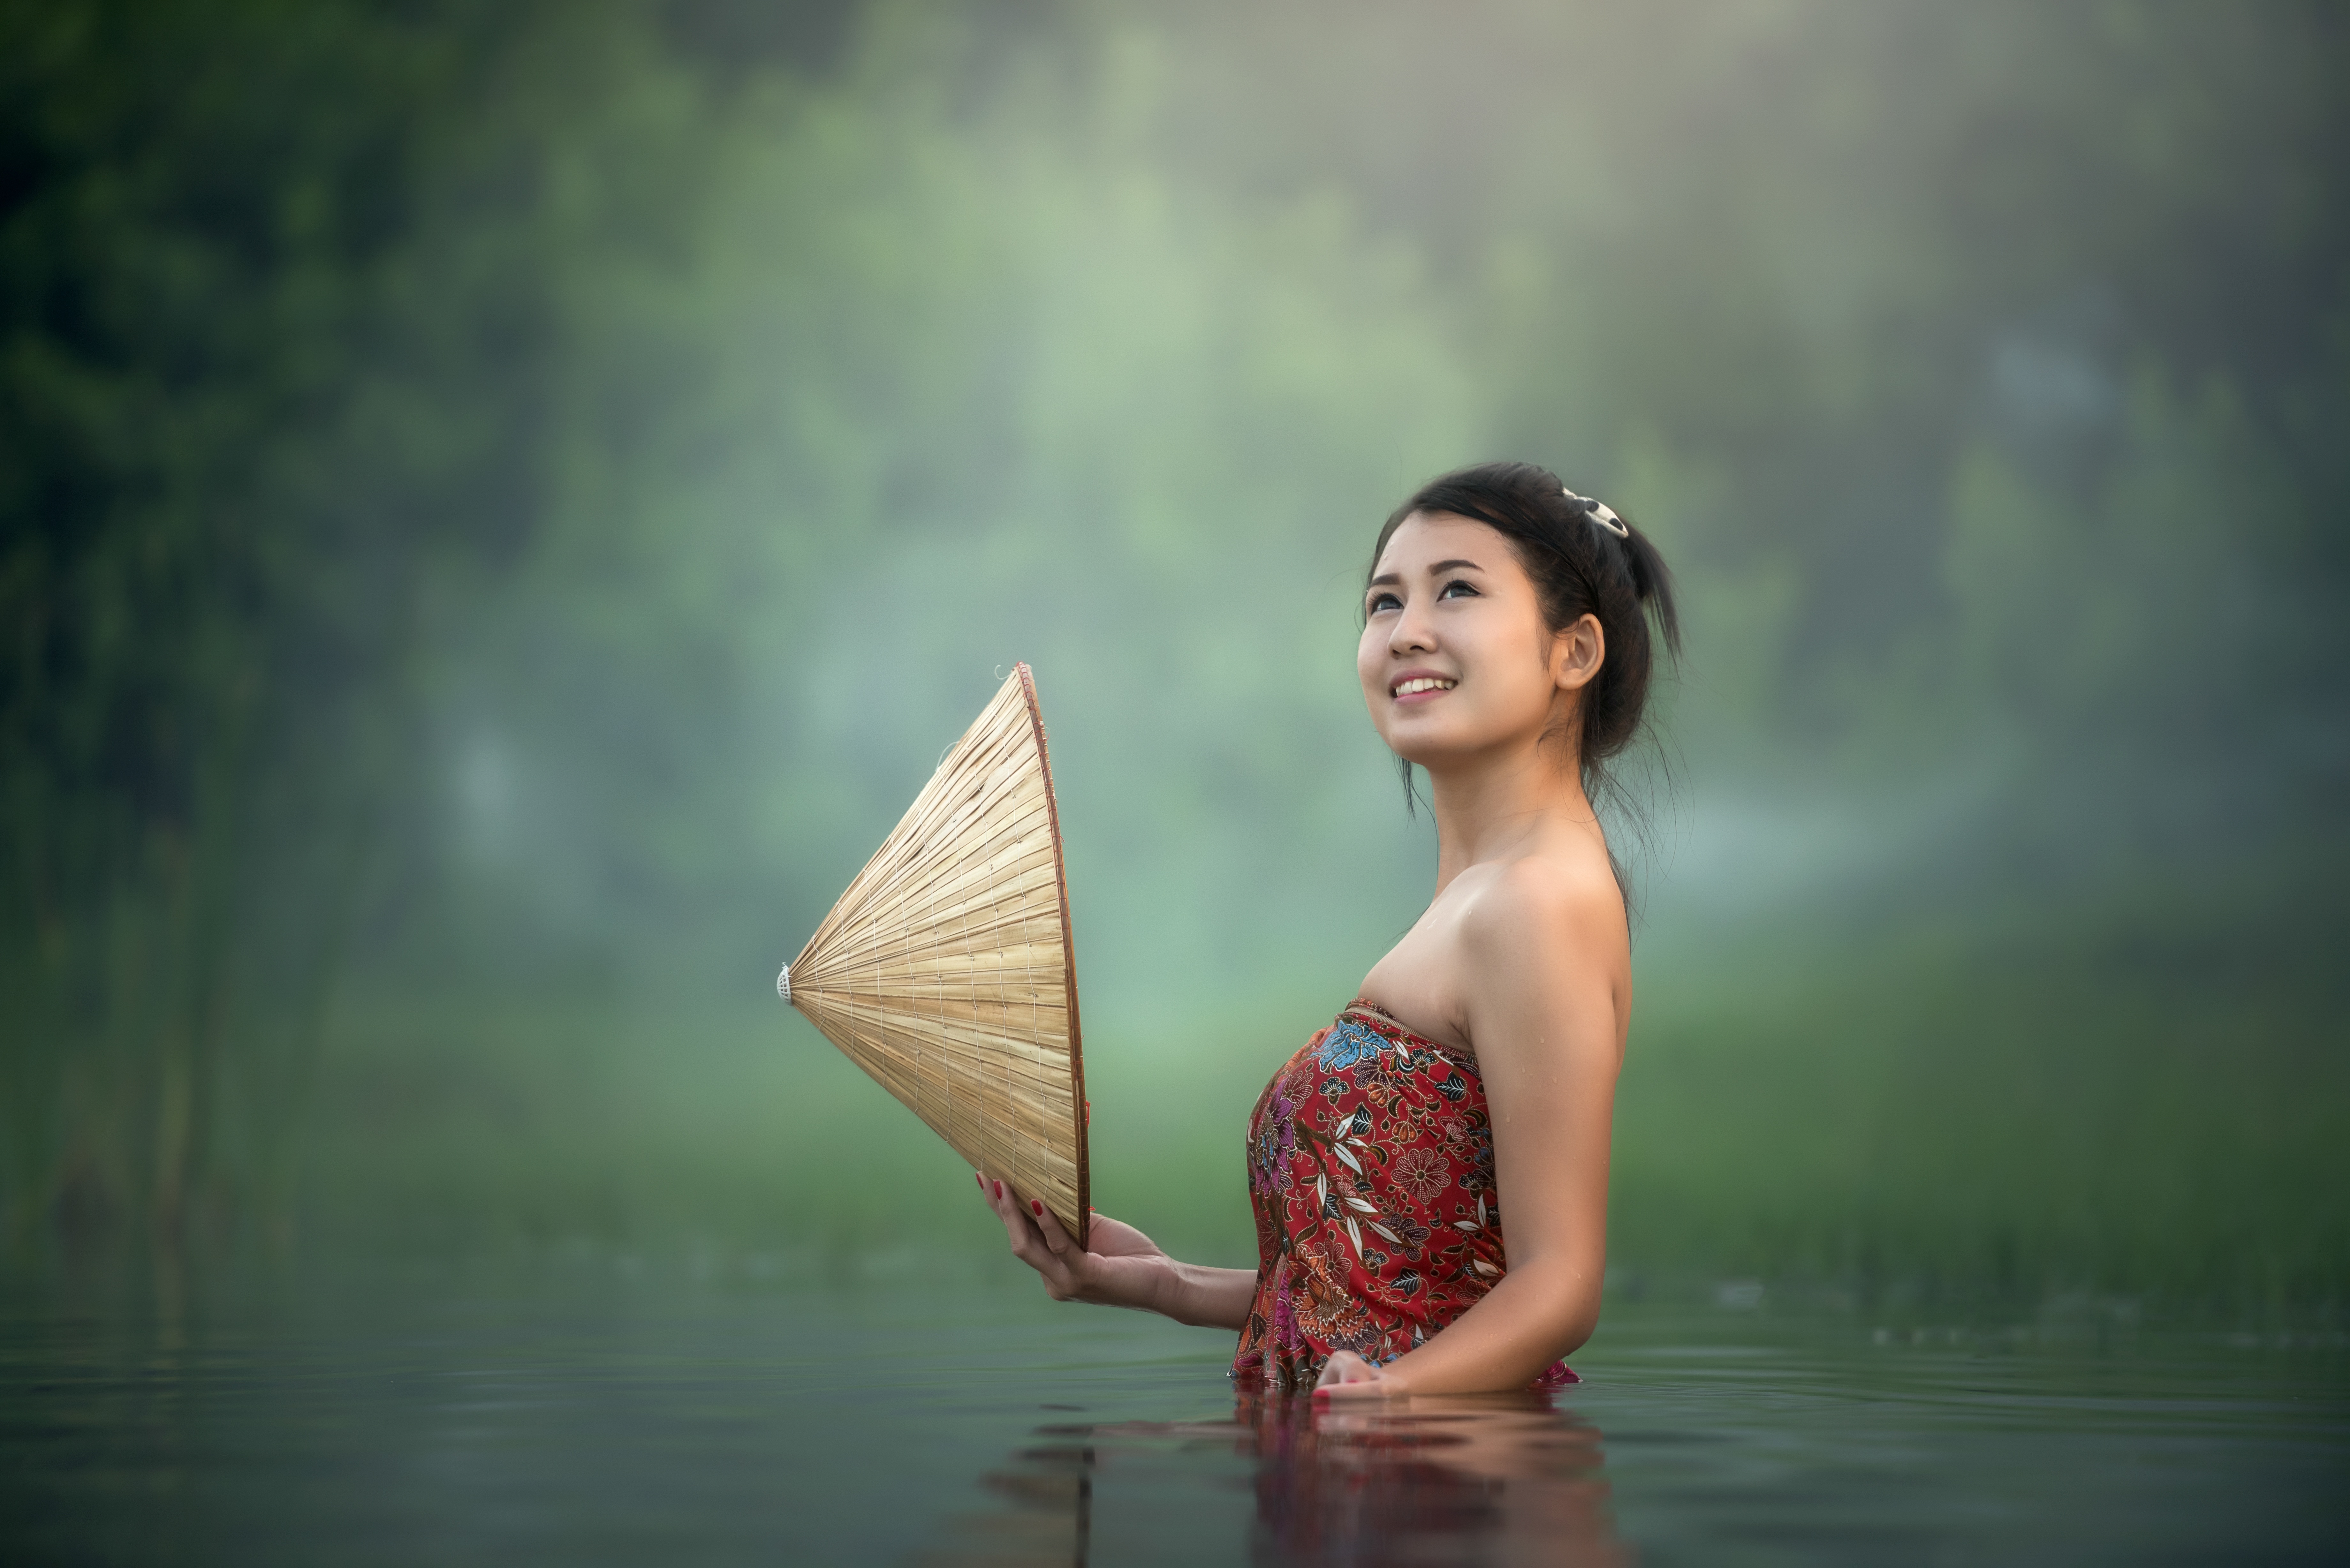 HD wallpaper, Thailand, Portrait, Asian Girl, Pond, 5K, 8K, Smiling, Bath Time, Lake, Teen